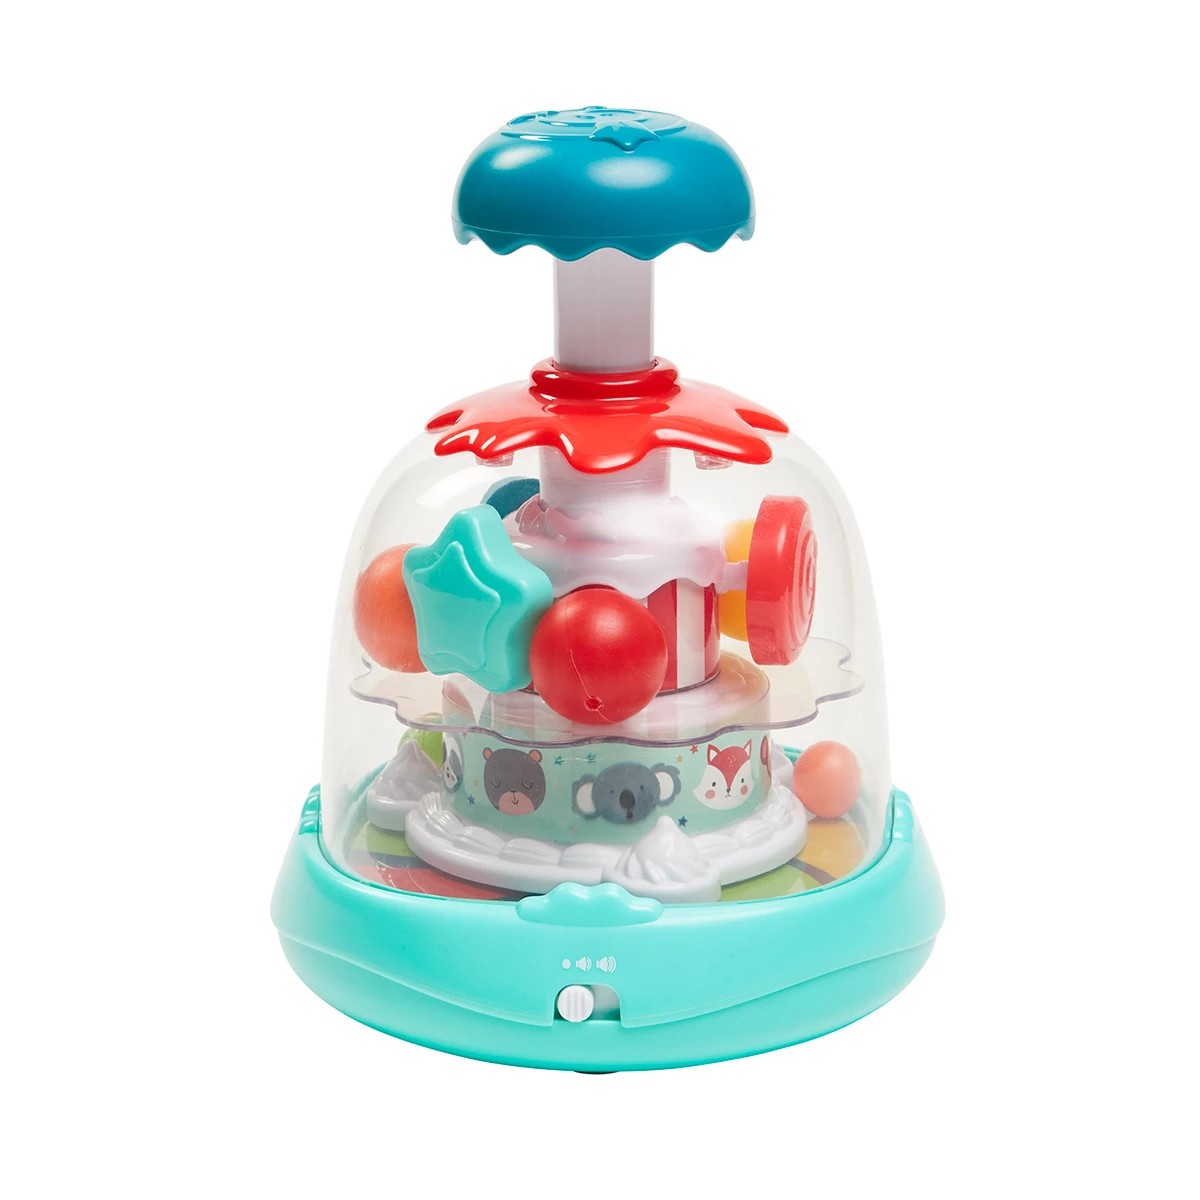 Push & Spin Toy - Anko | Target Australia